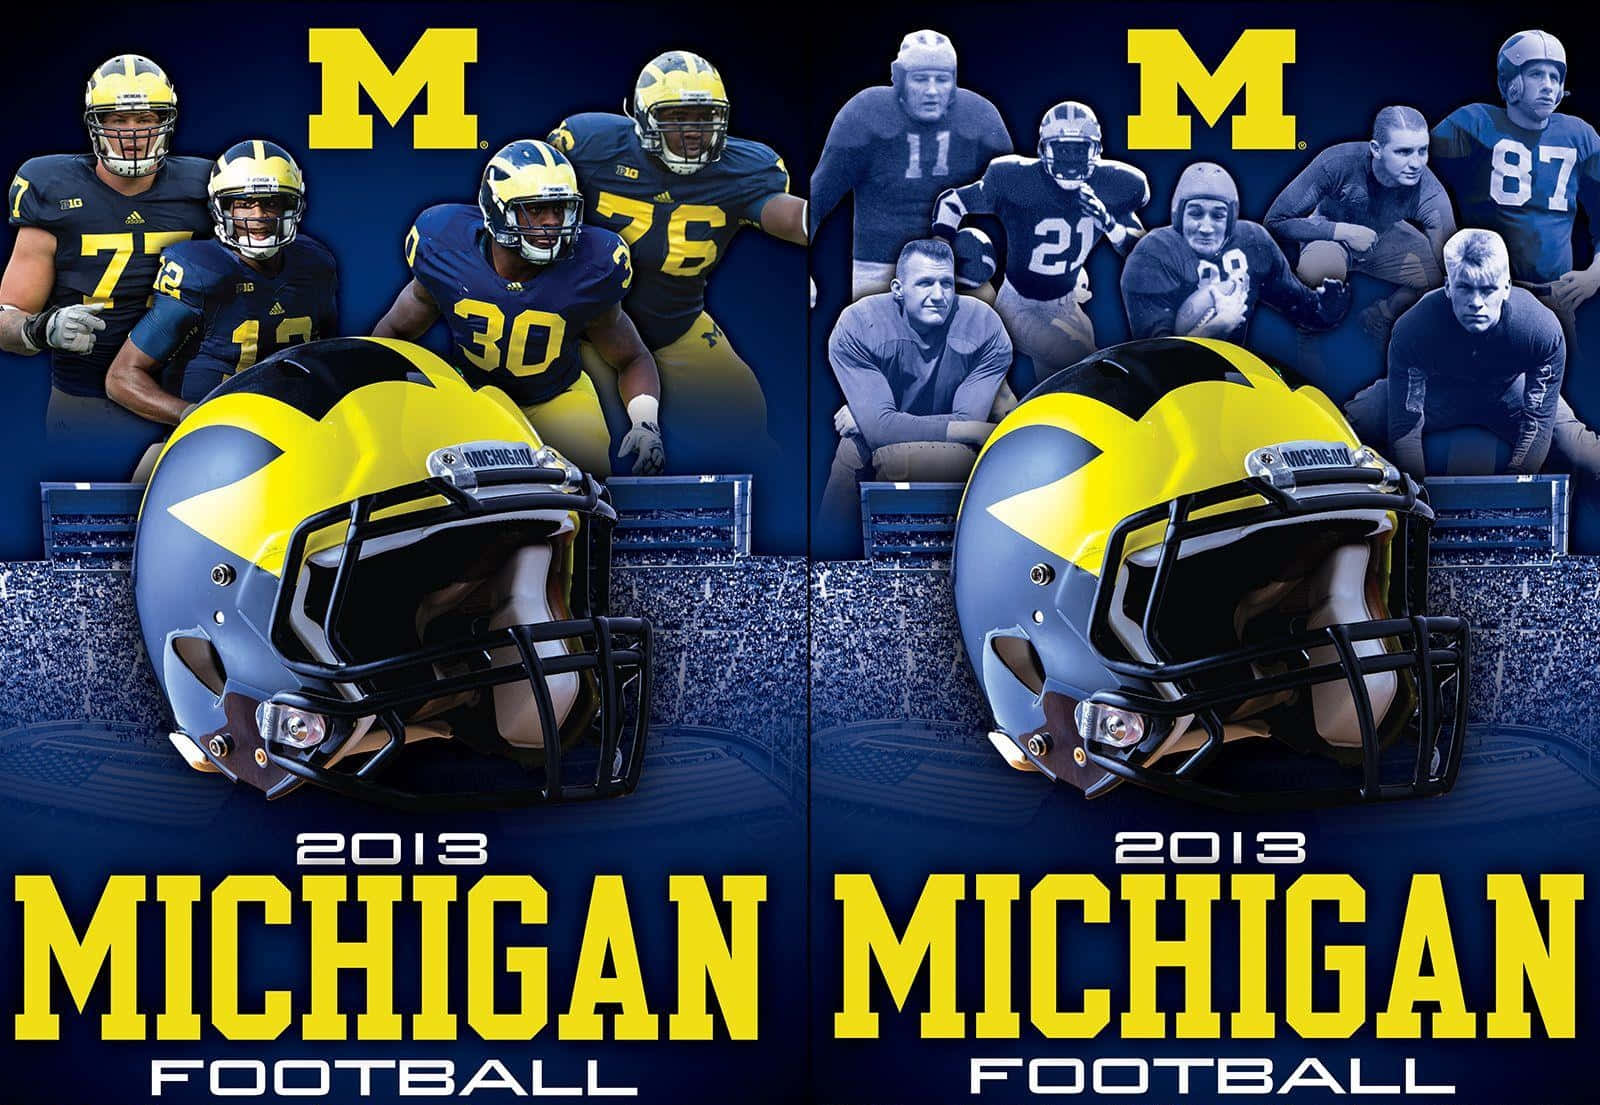 "Go Blue - Michigan Football" Wallpaper